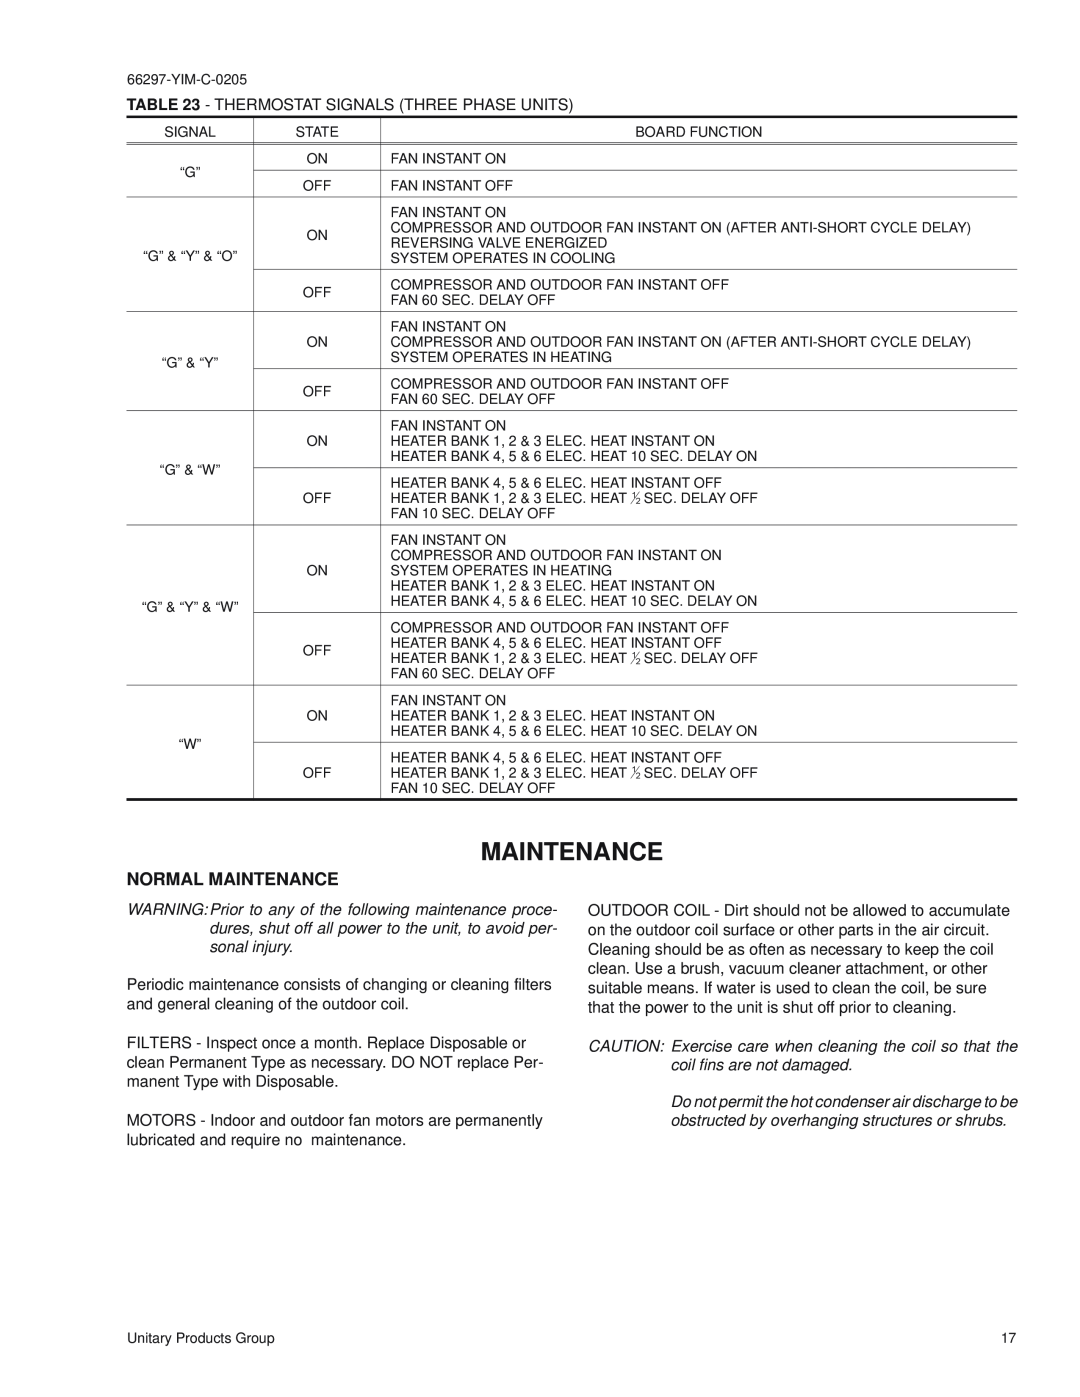 York B1HH018, THRU 060 installation instructions Normal Maintenance 